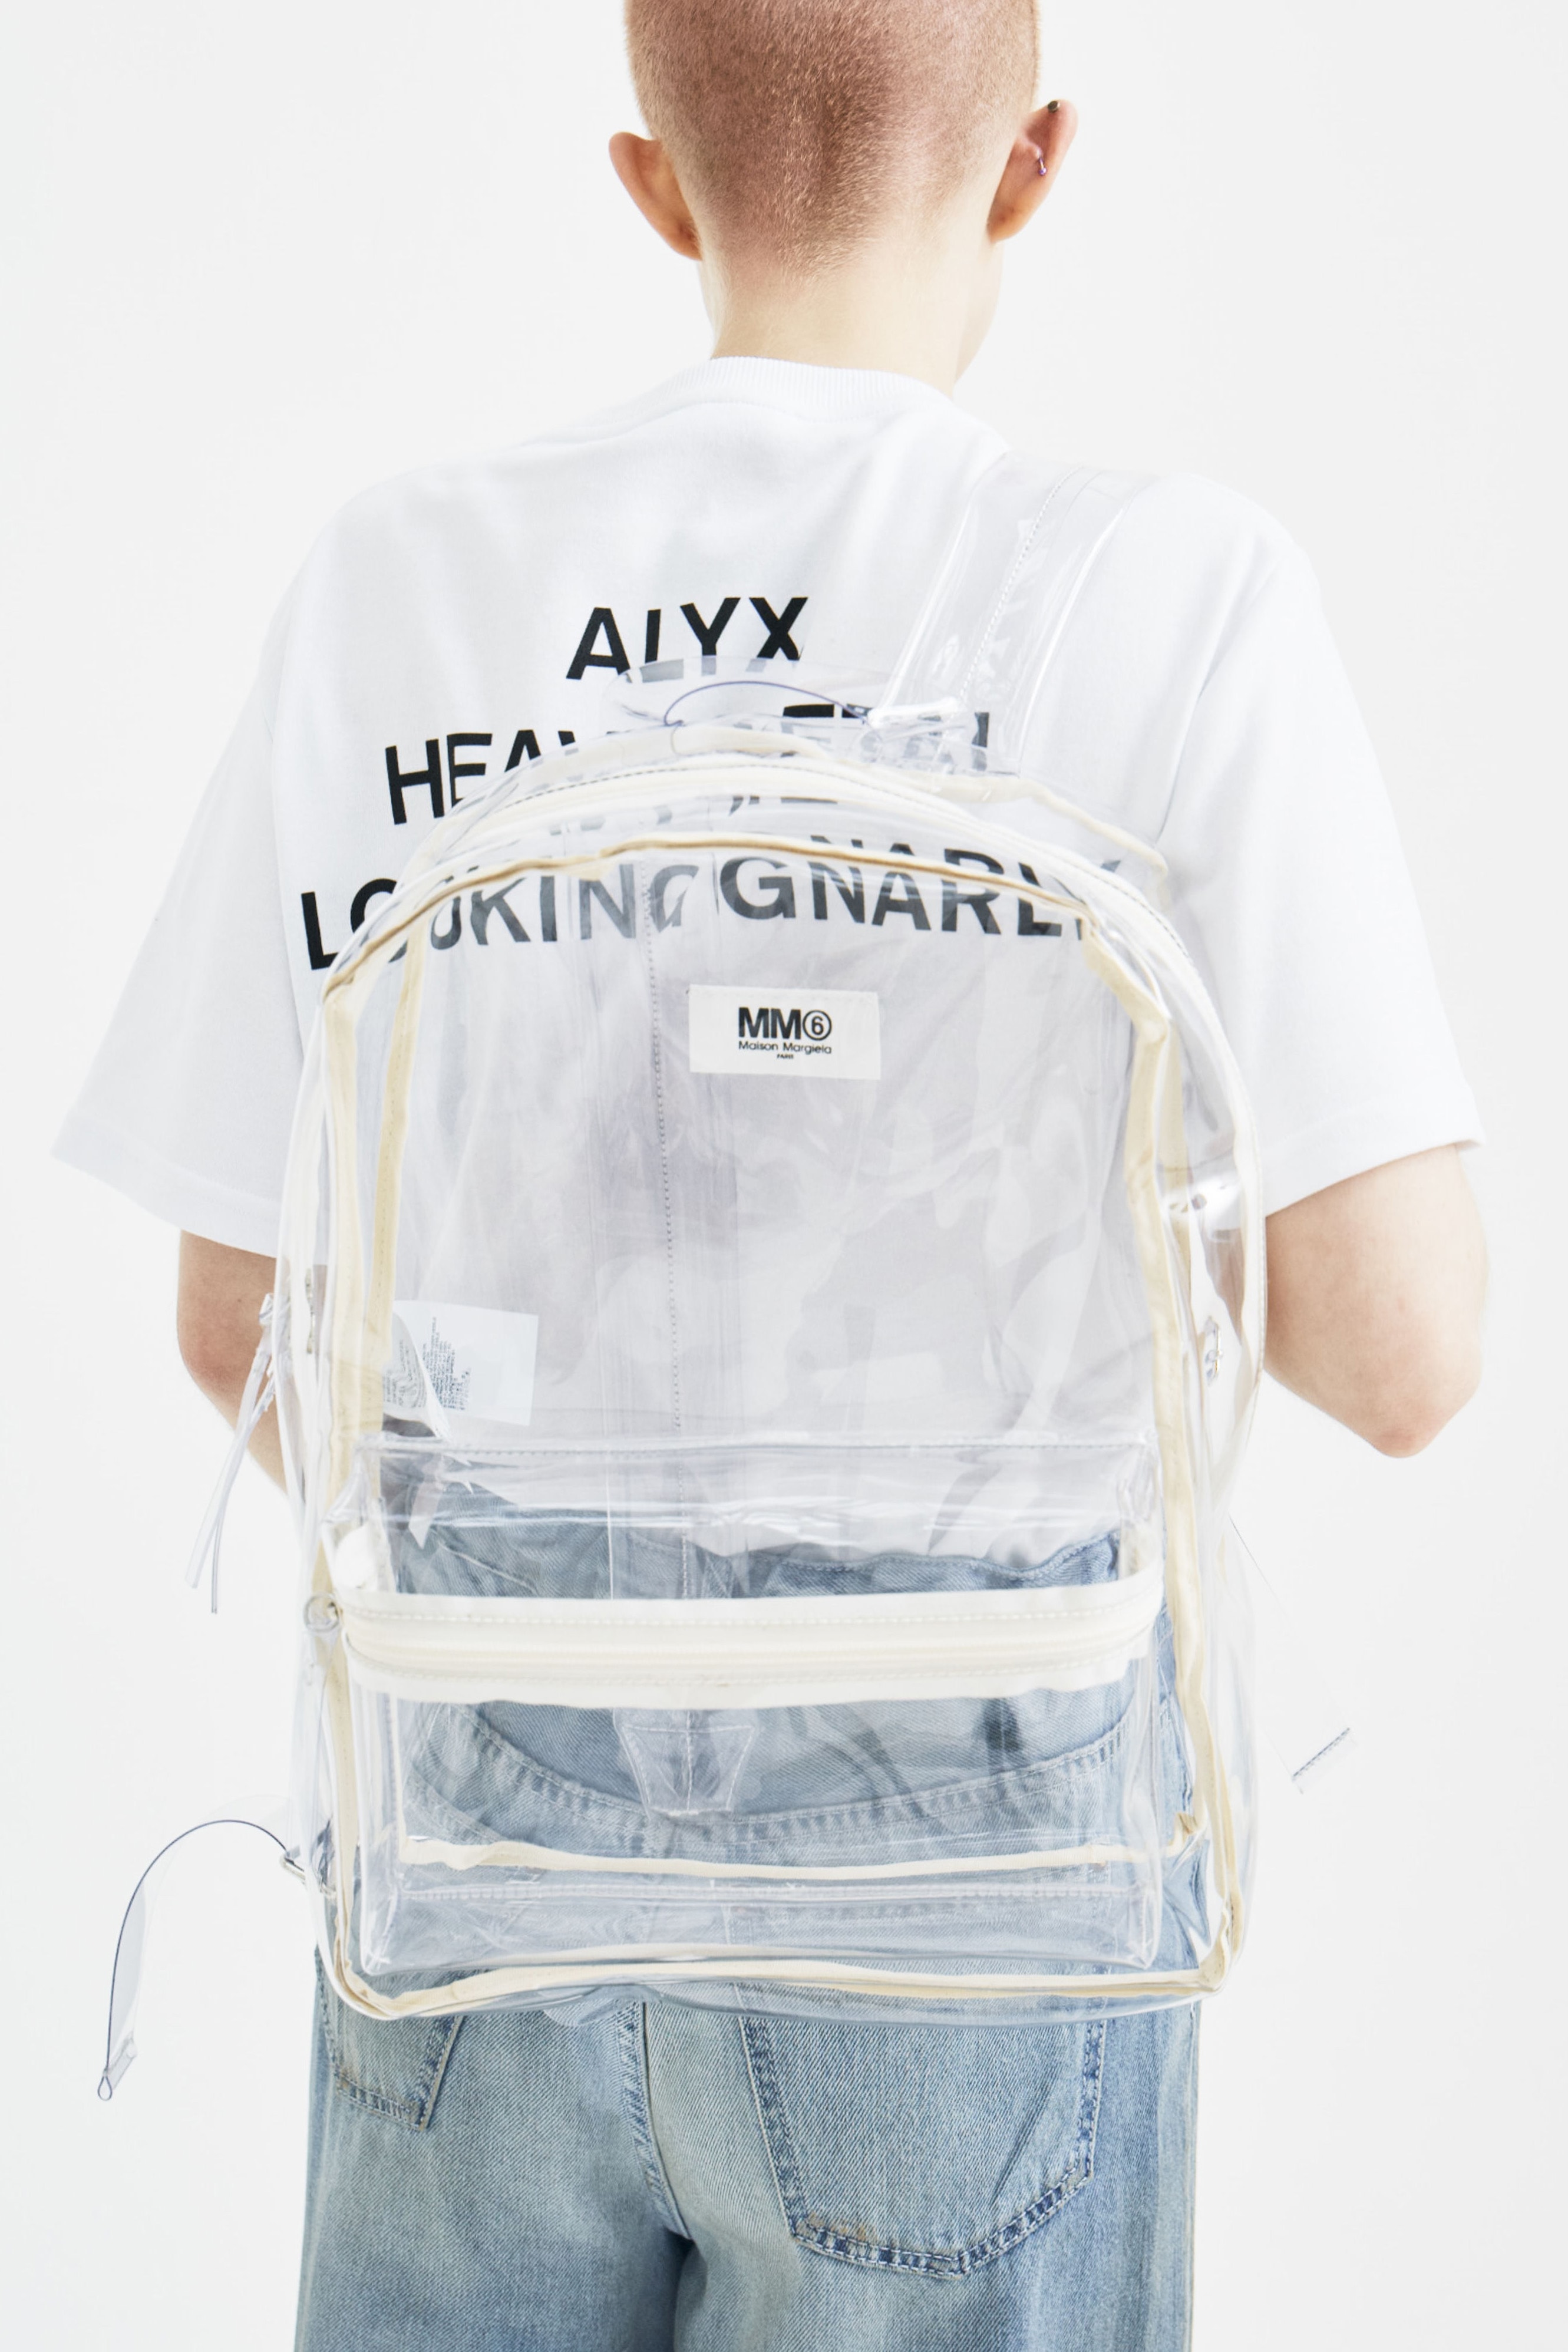 MM6 Maison Margiela Clear PVC Backpack Bag Plastic Transparent